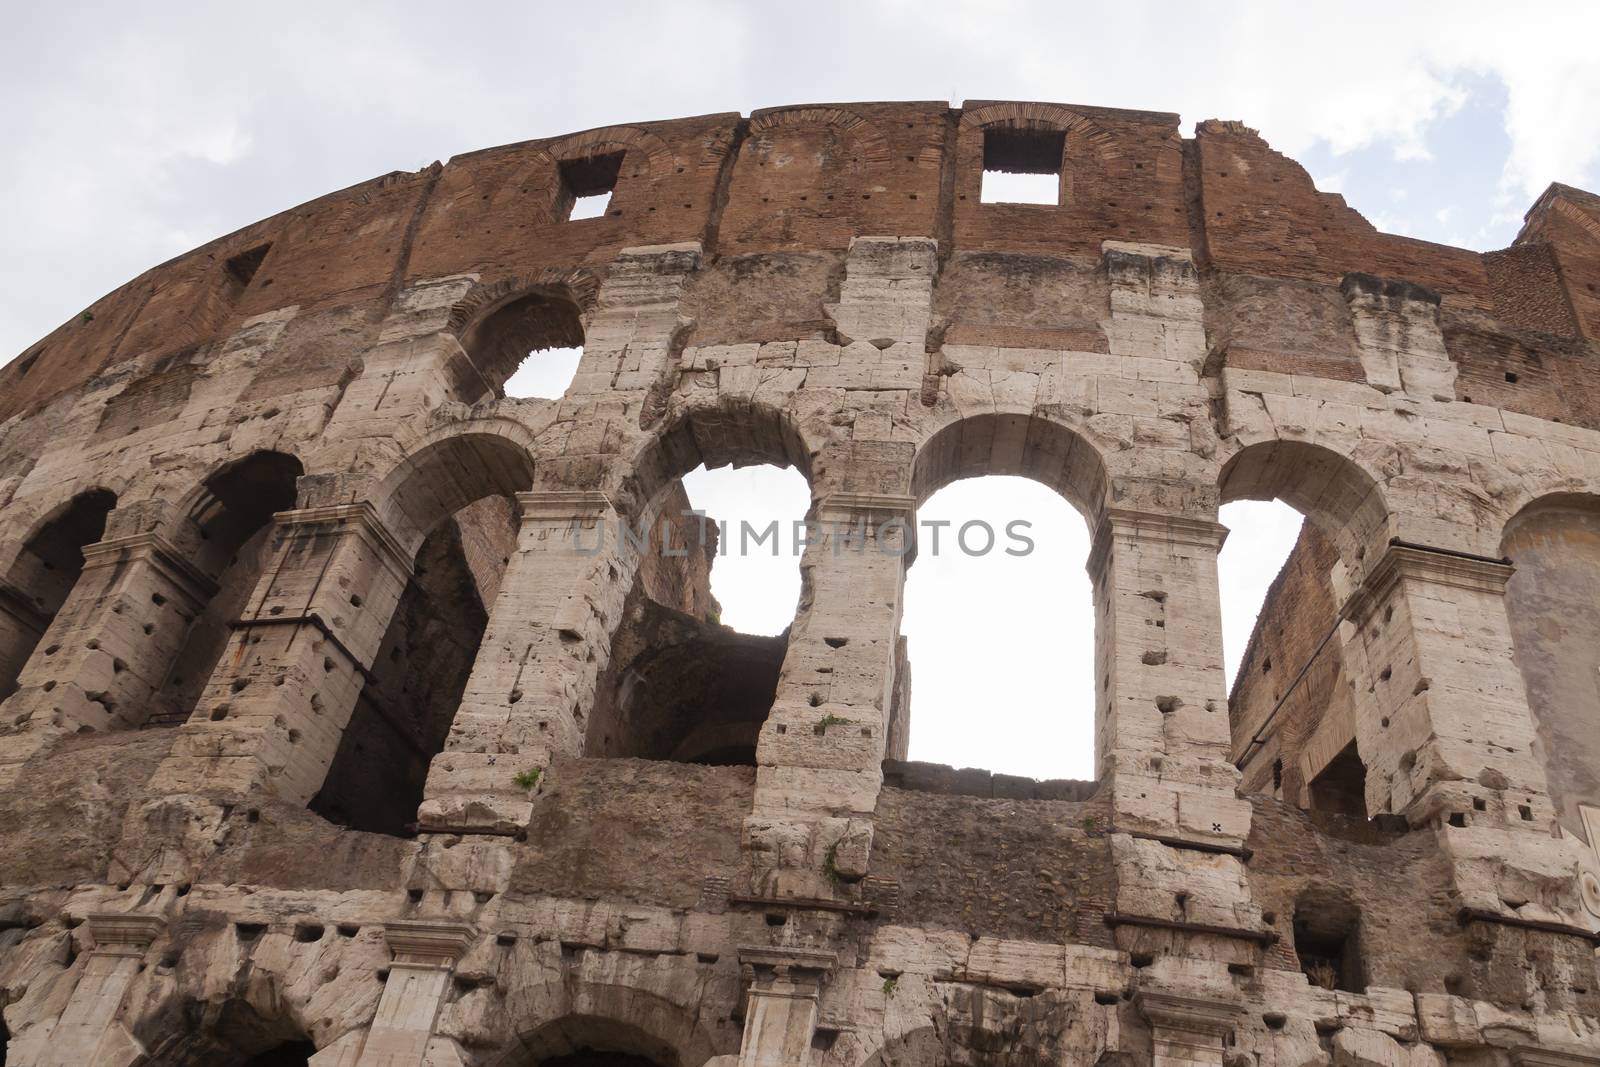 Rome, Italy - June 27, 2010: Arches of the Colosseum, Rome by alvarobueno